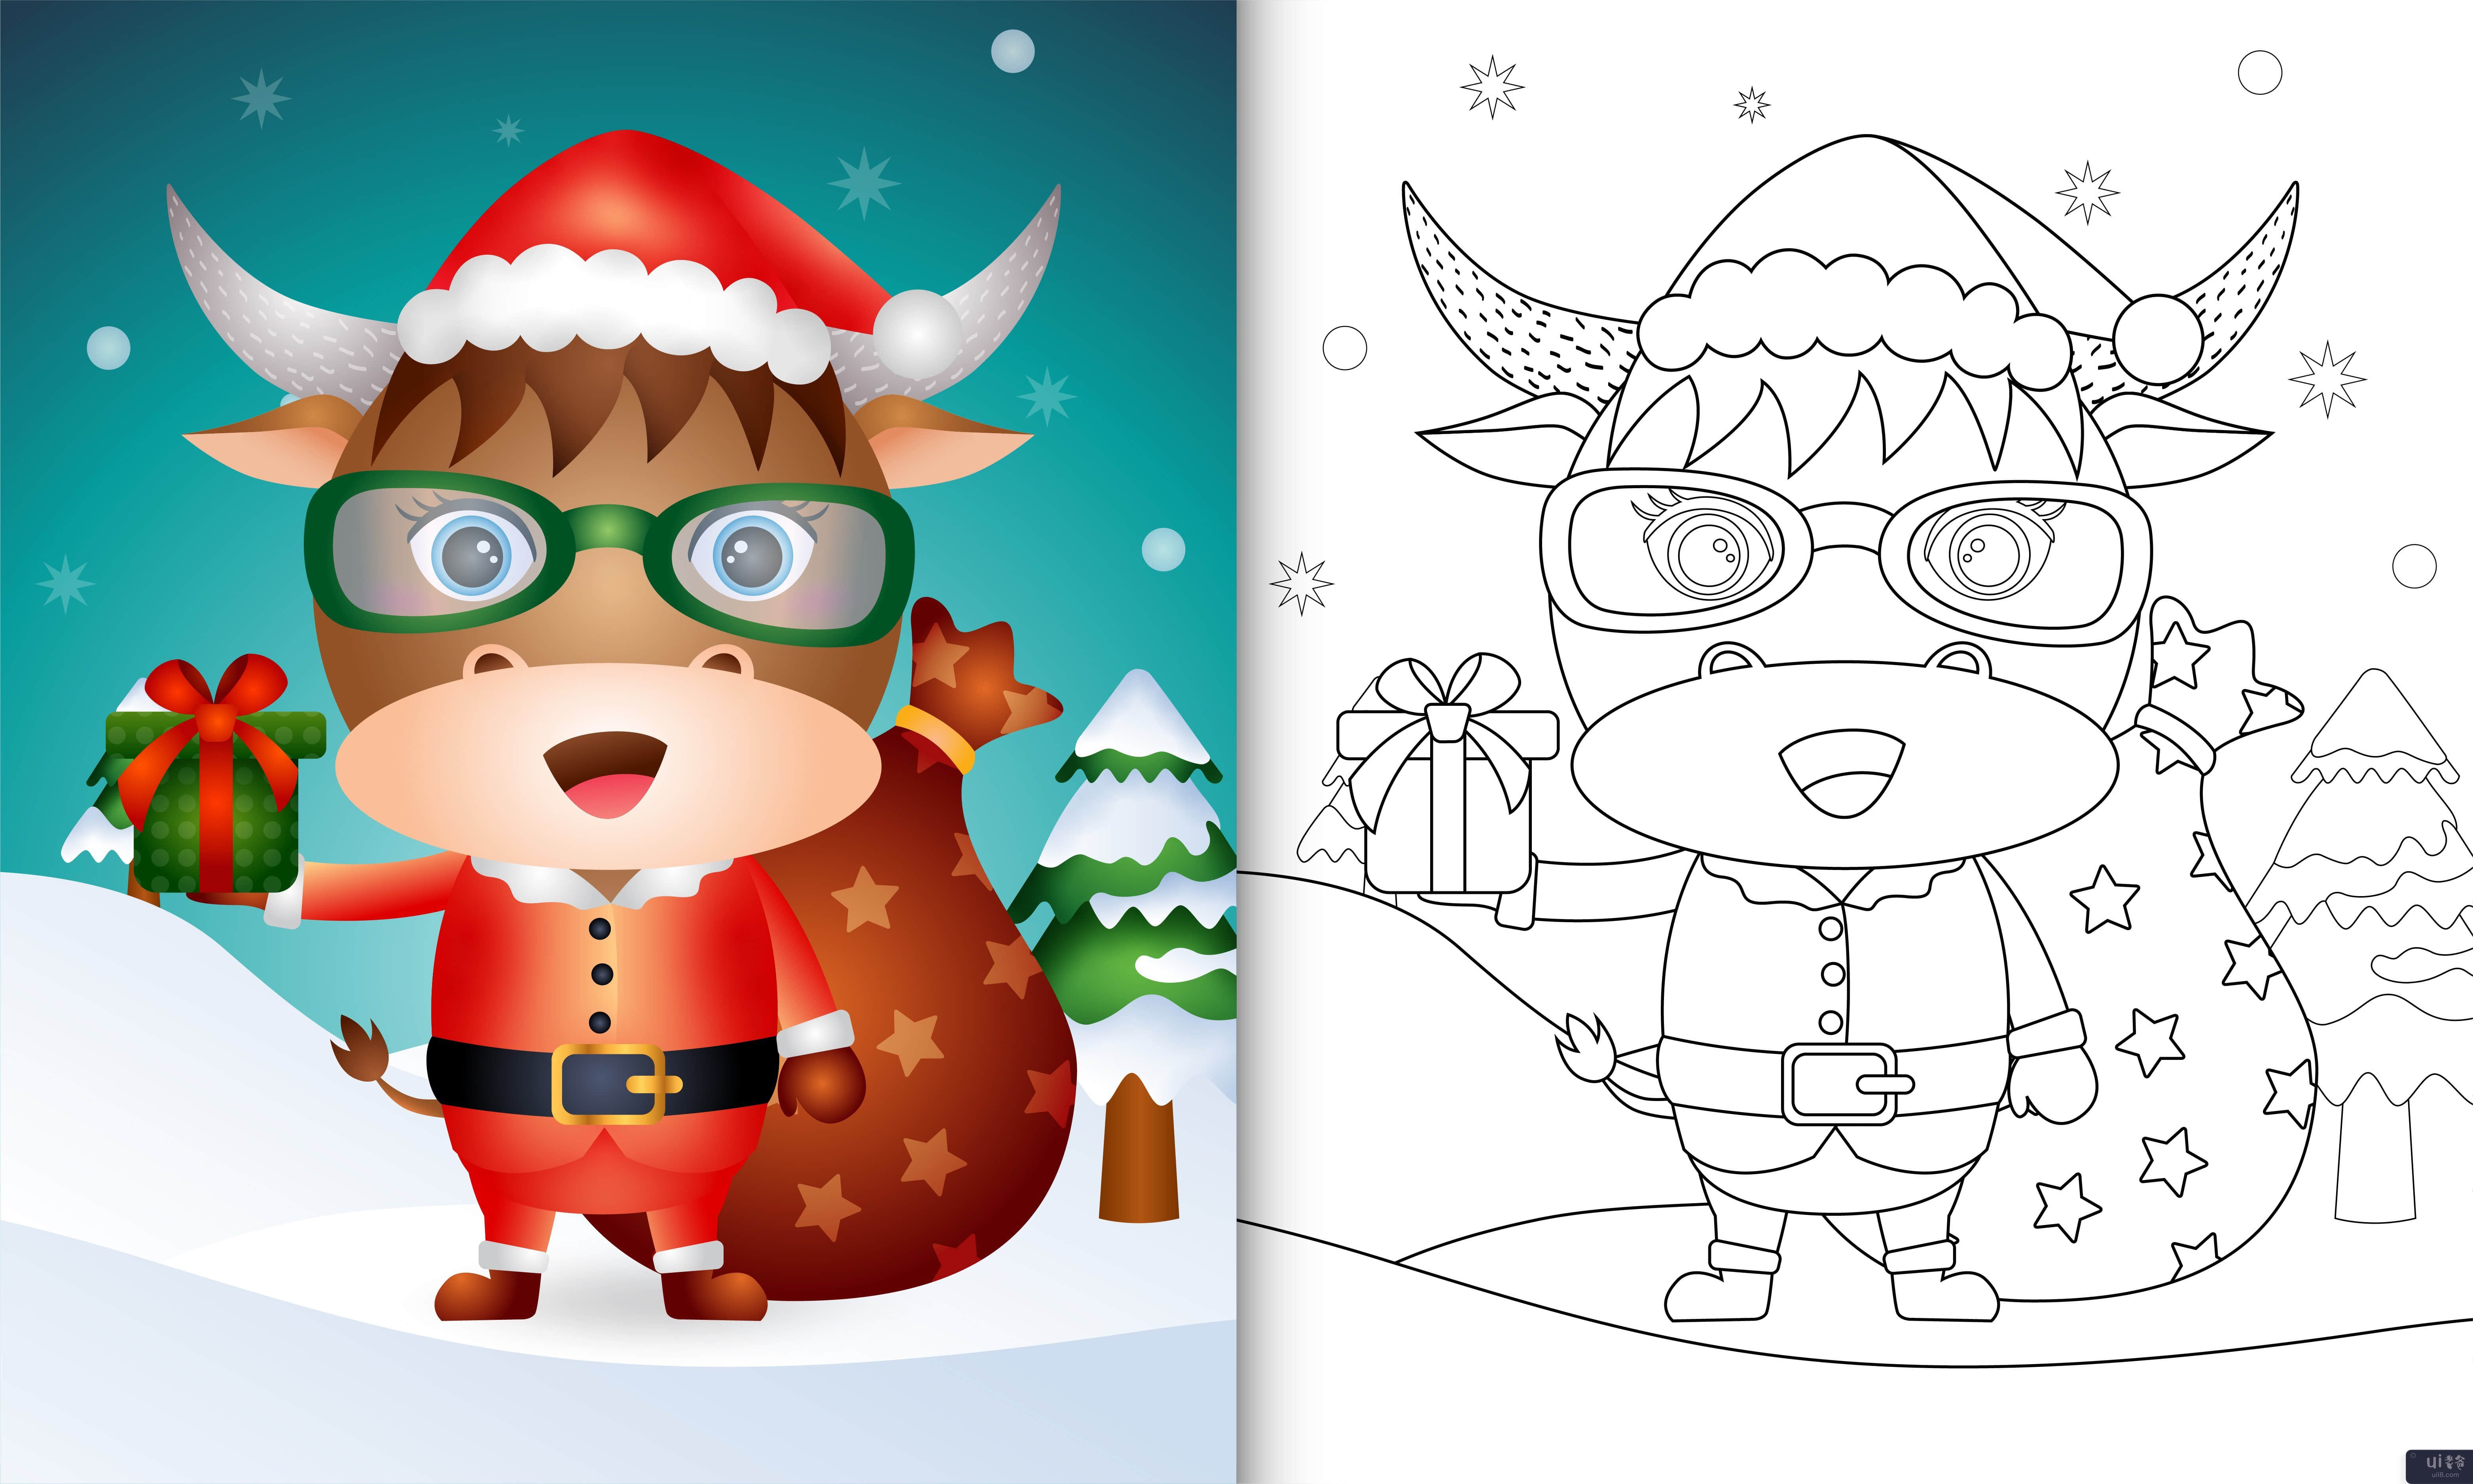 使用圣诞老人服装的可爱水牛着色书(coloring book with a cute buffalo using santa clause costume)插图2